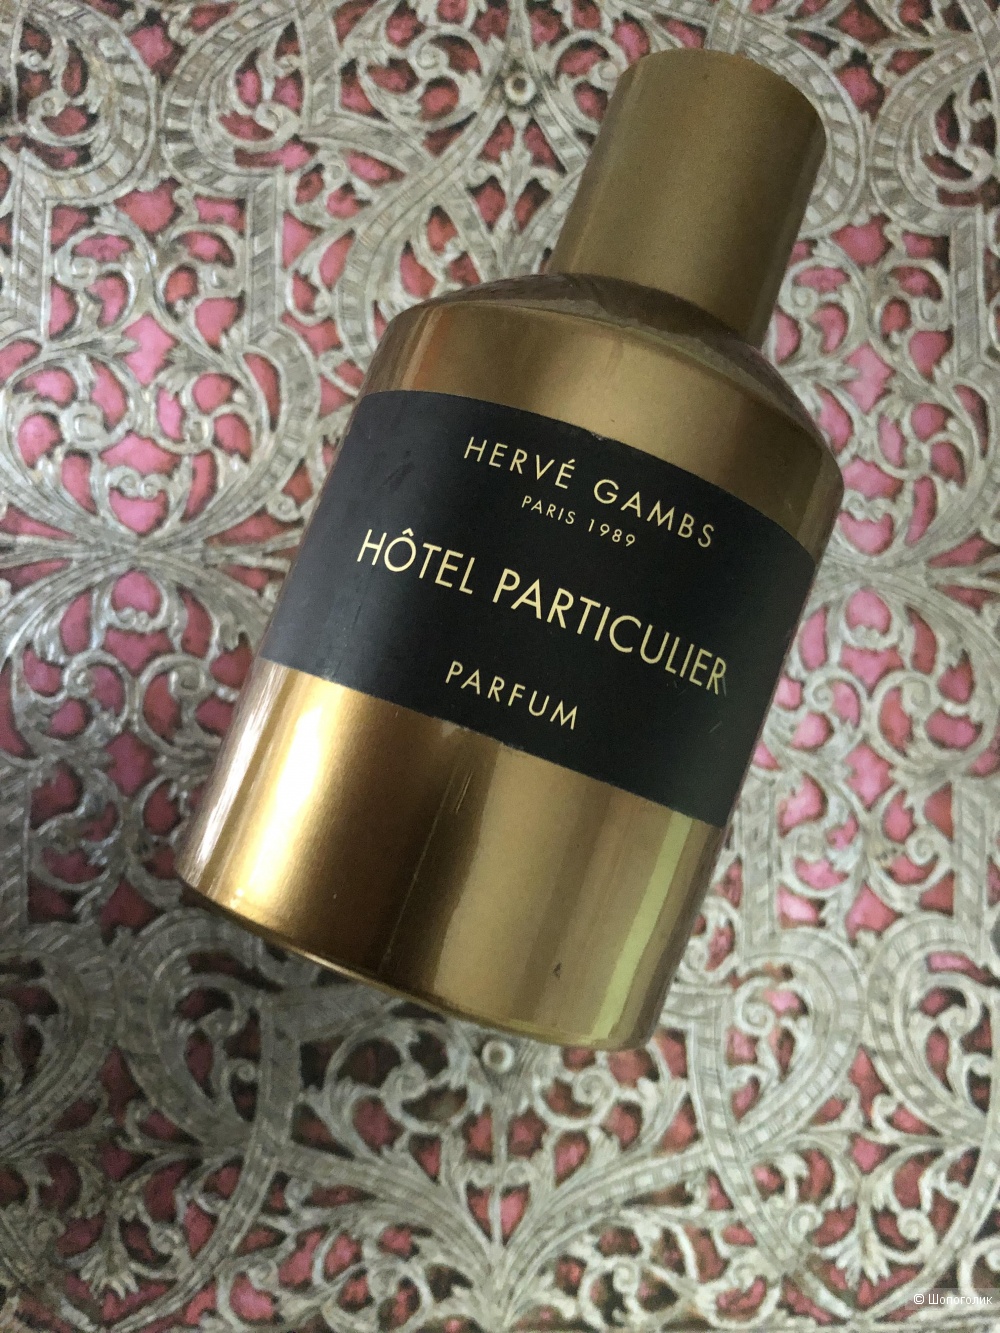 Парфюм Hotel Particulier Herve Gambs Paris,100ml